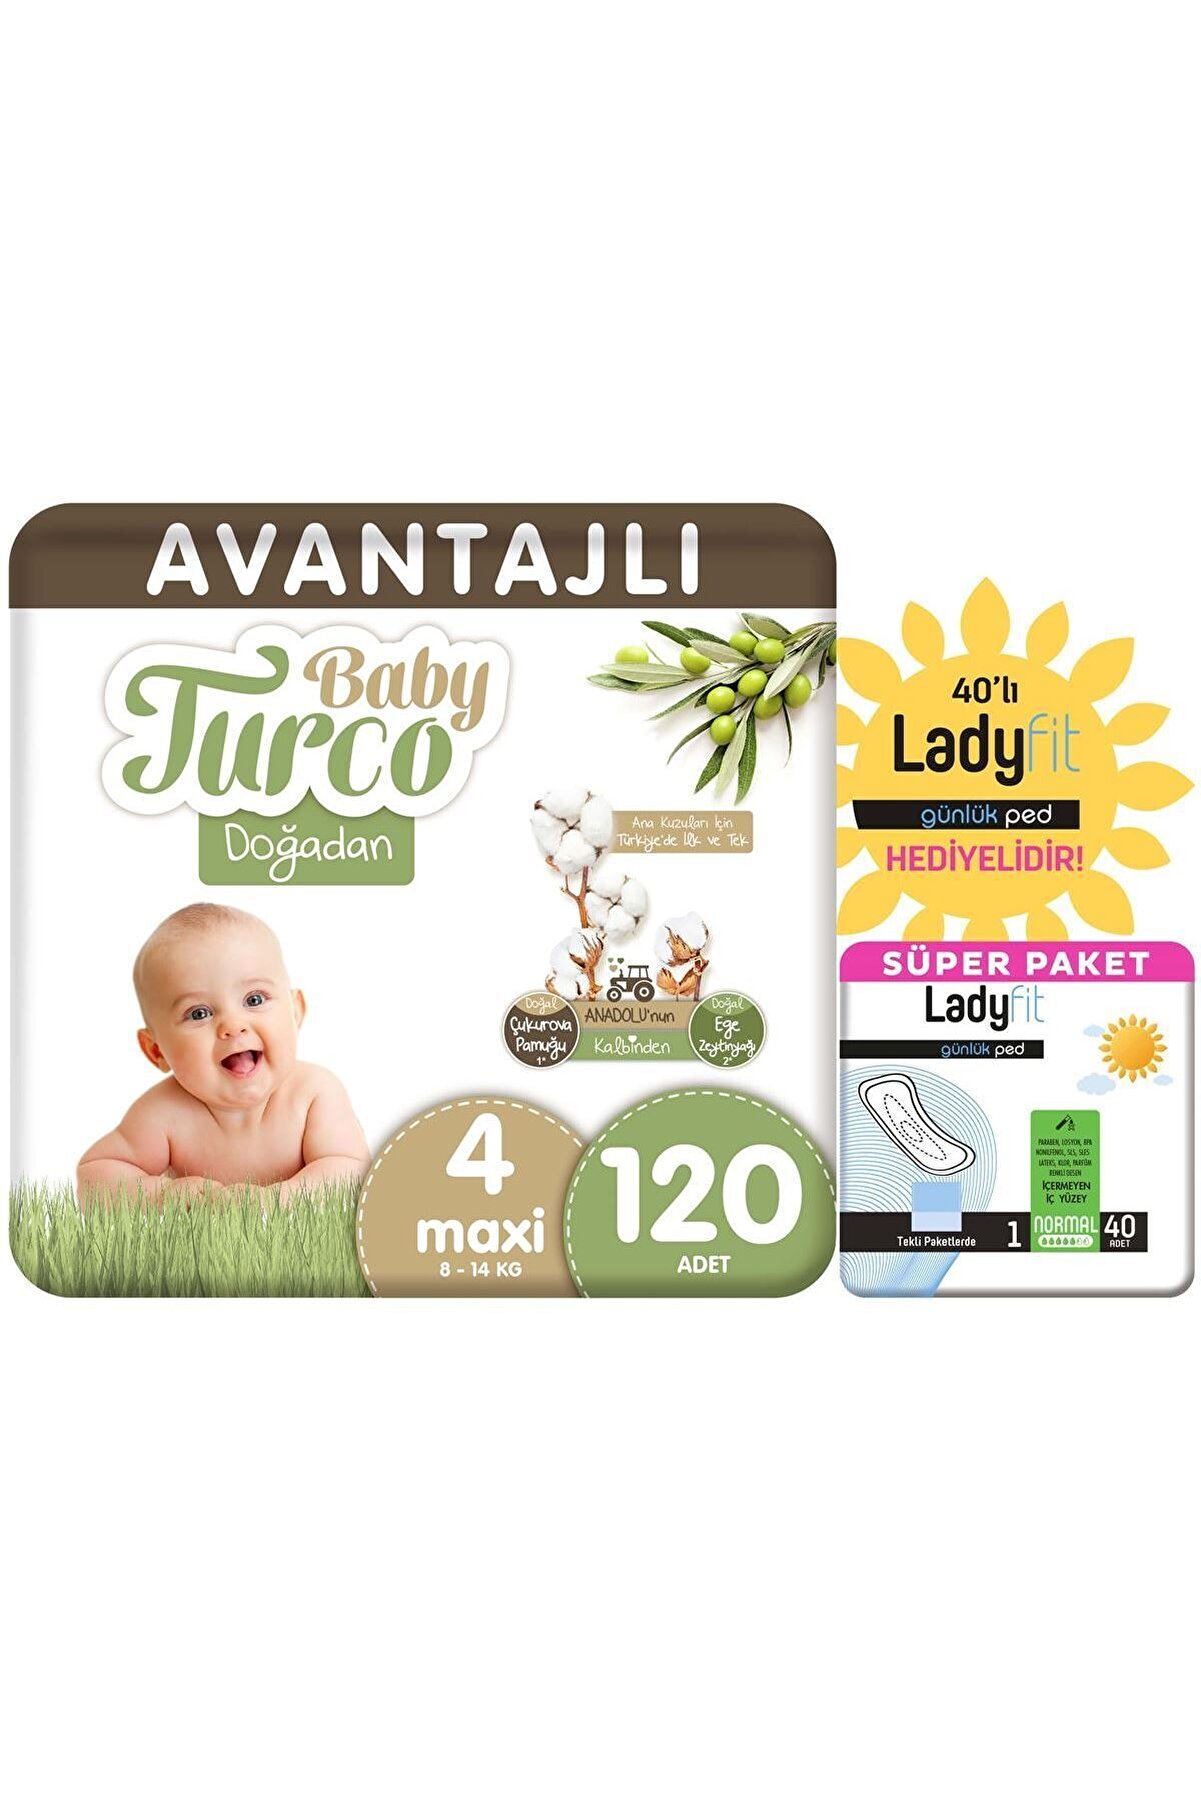 Baby Turco Doğadan Avantajlı Paket Bebek Bezi 4 Numara Maxi 120 Adet + Günlük Ped